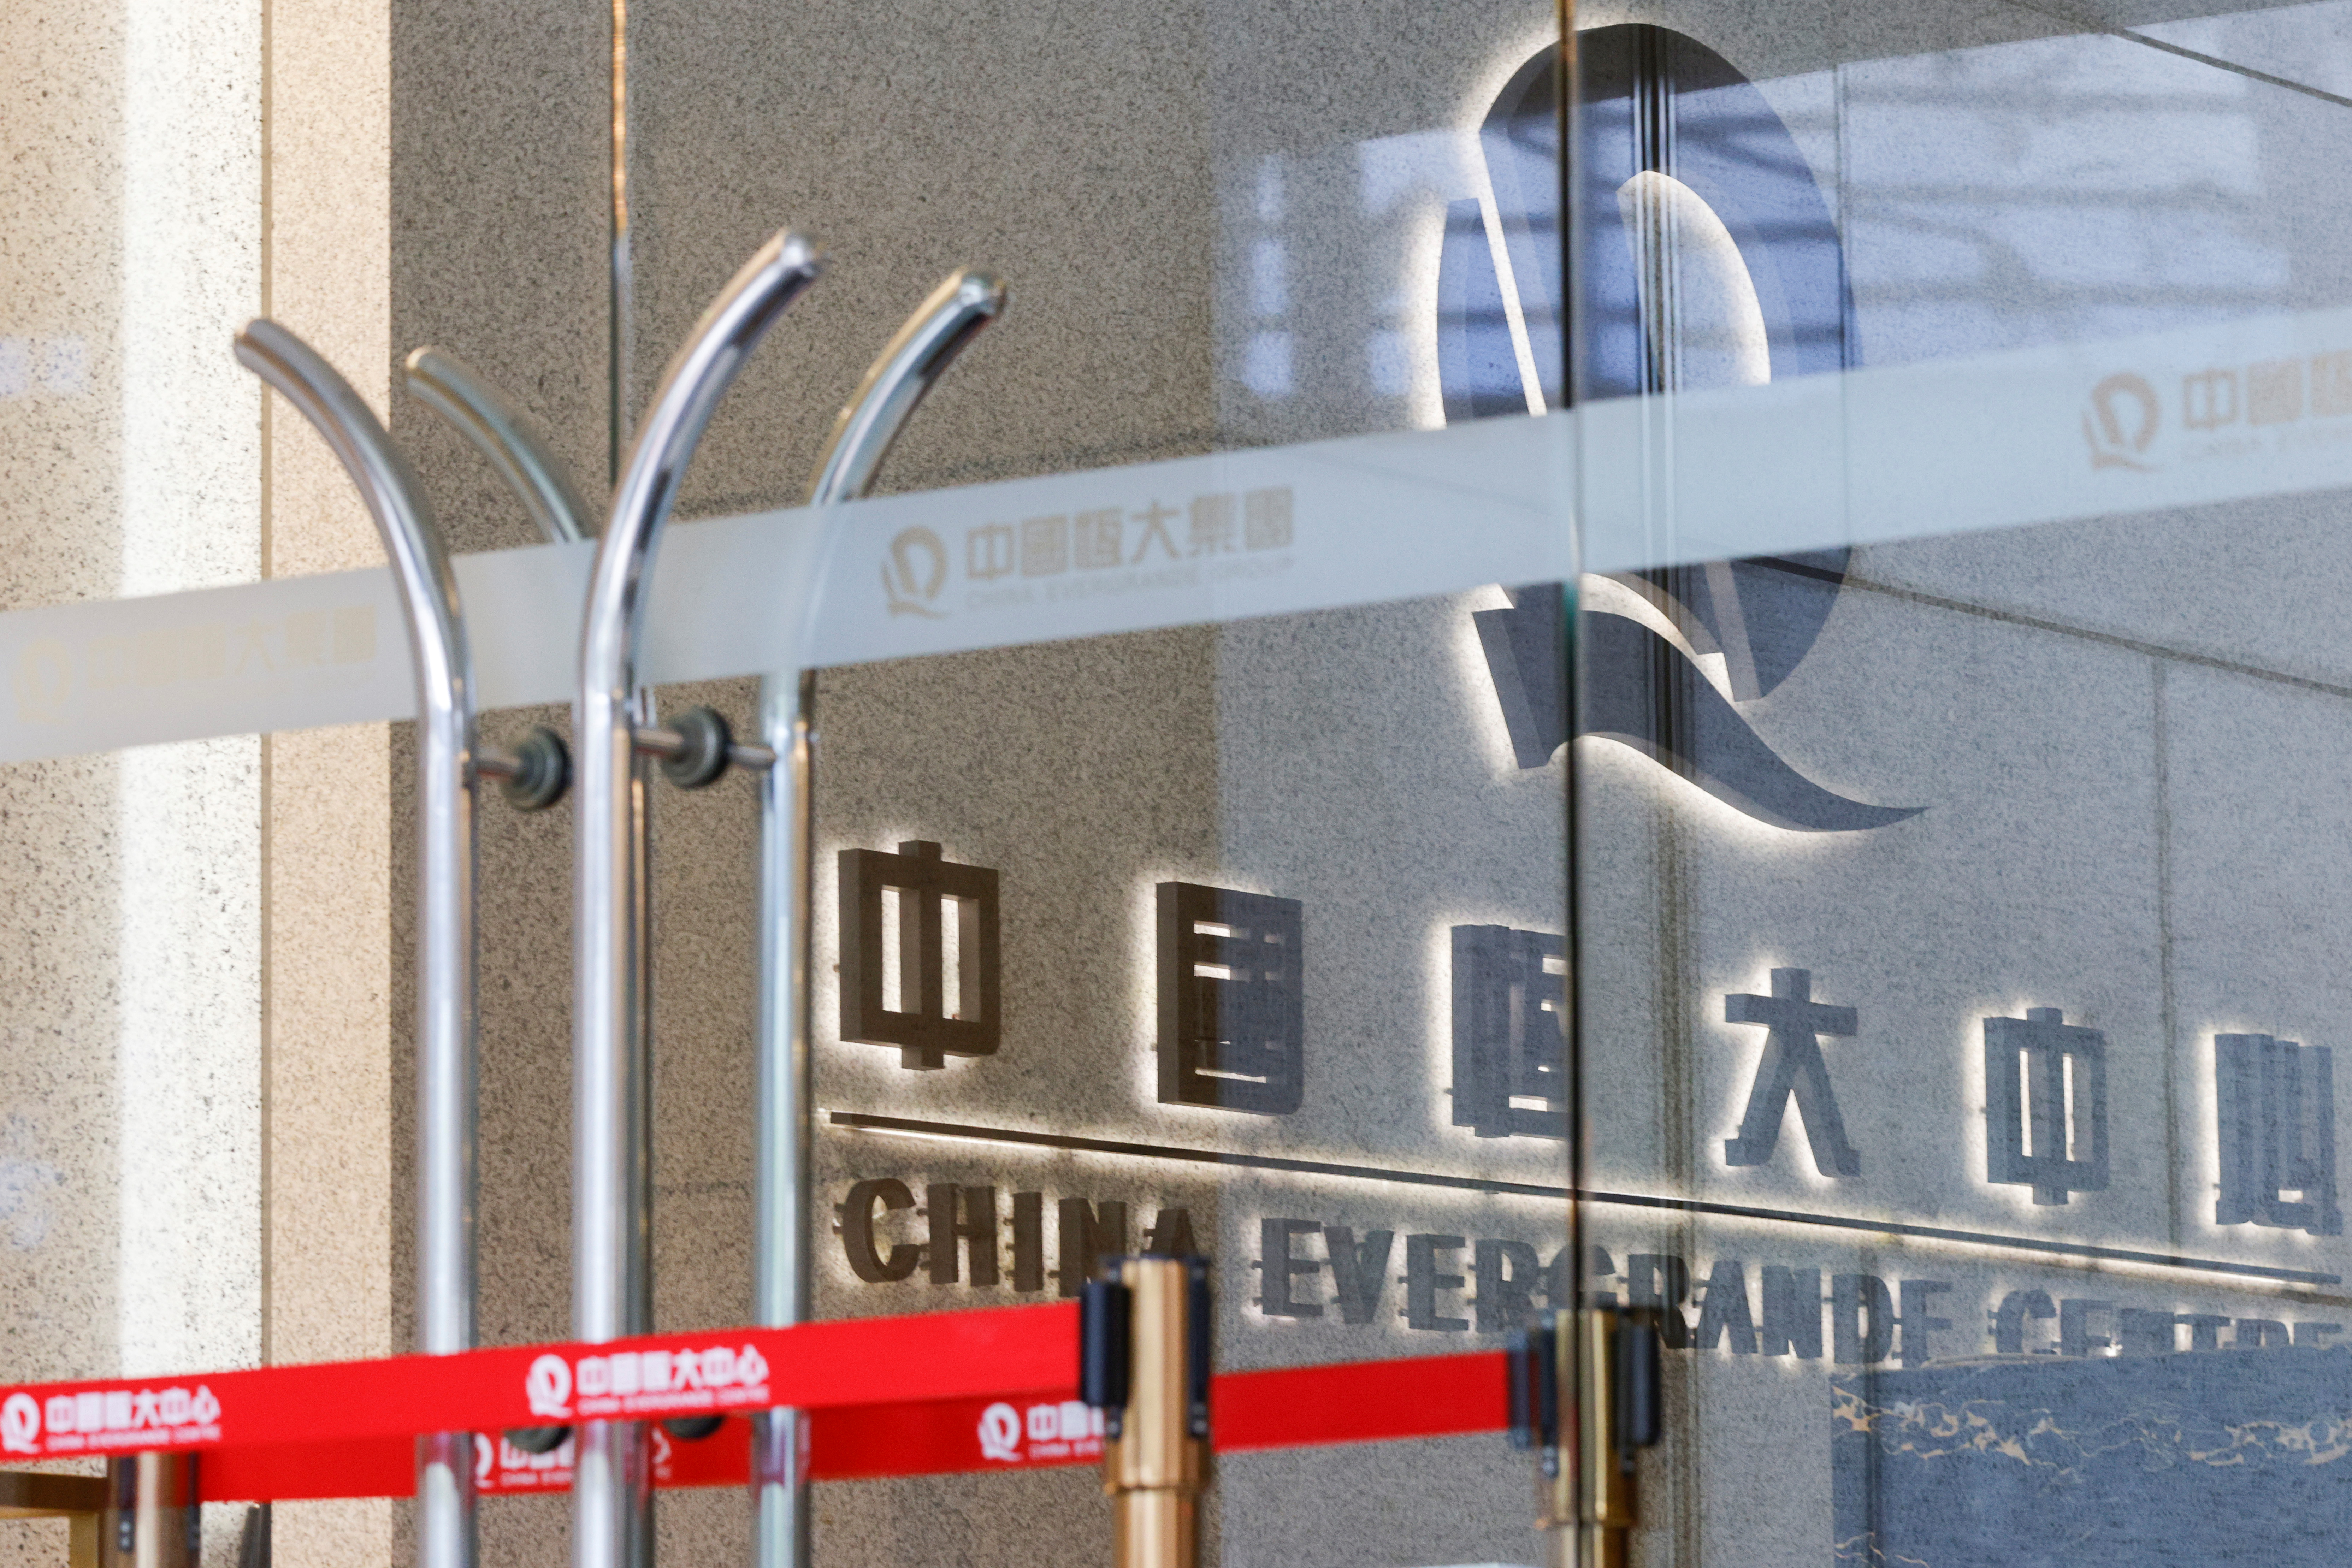 The logo of China Evergrande is seen at China Evergrande Centre in Hong Kong, China December 7, 2021. REUTERS/Tyrone Siu